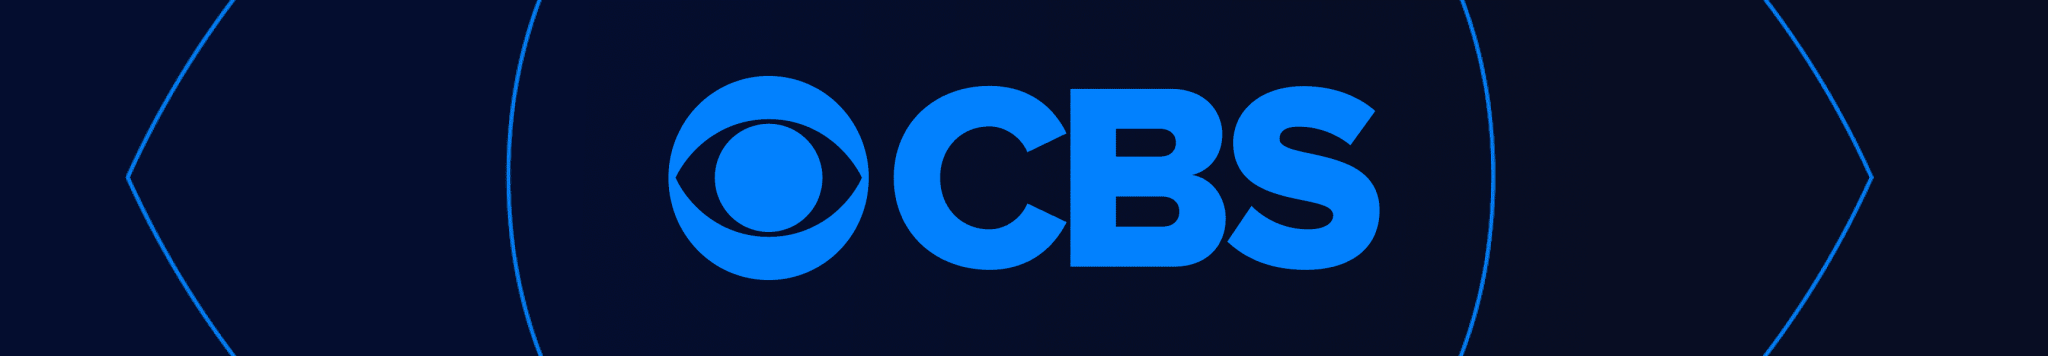 CBS Entertainment Mallas